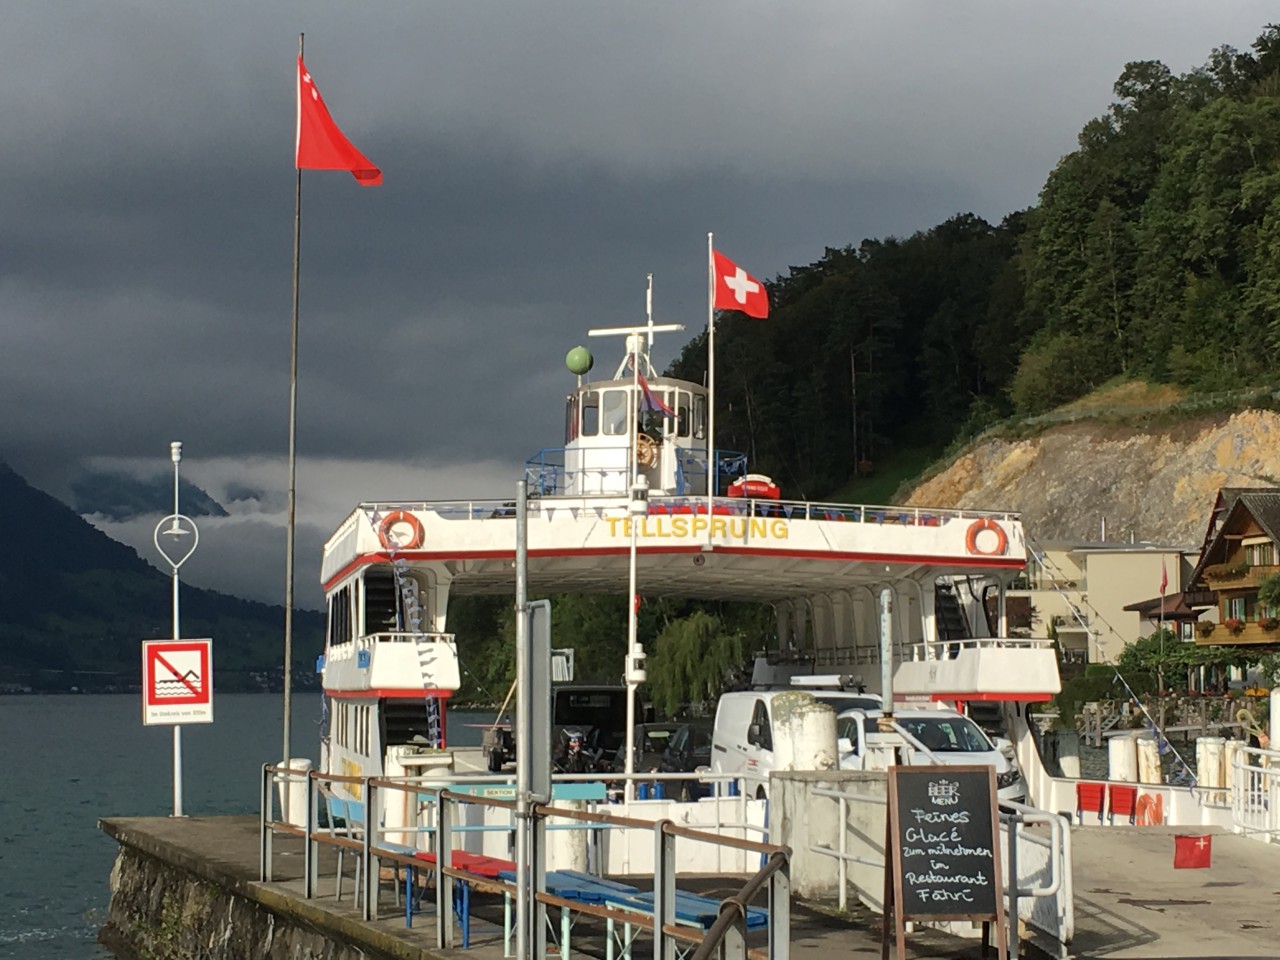 Lake Lucerne Ferry